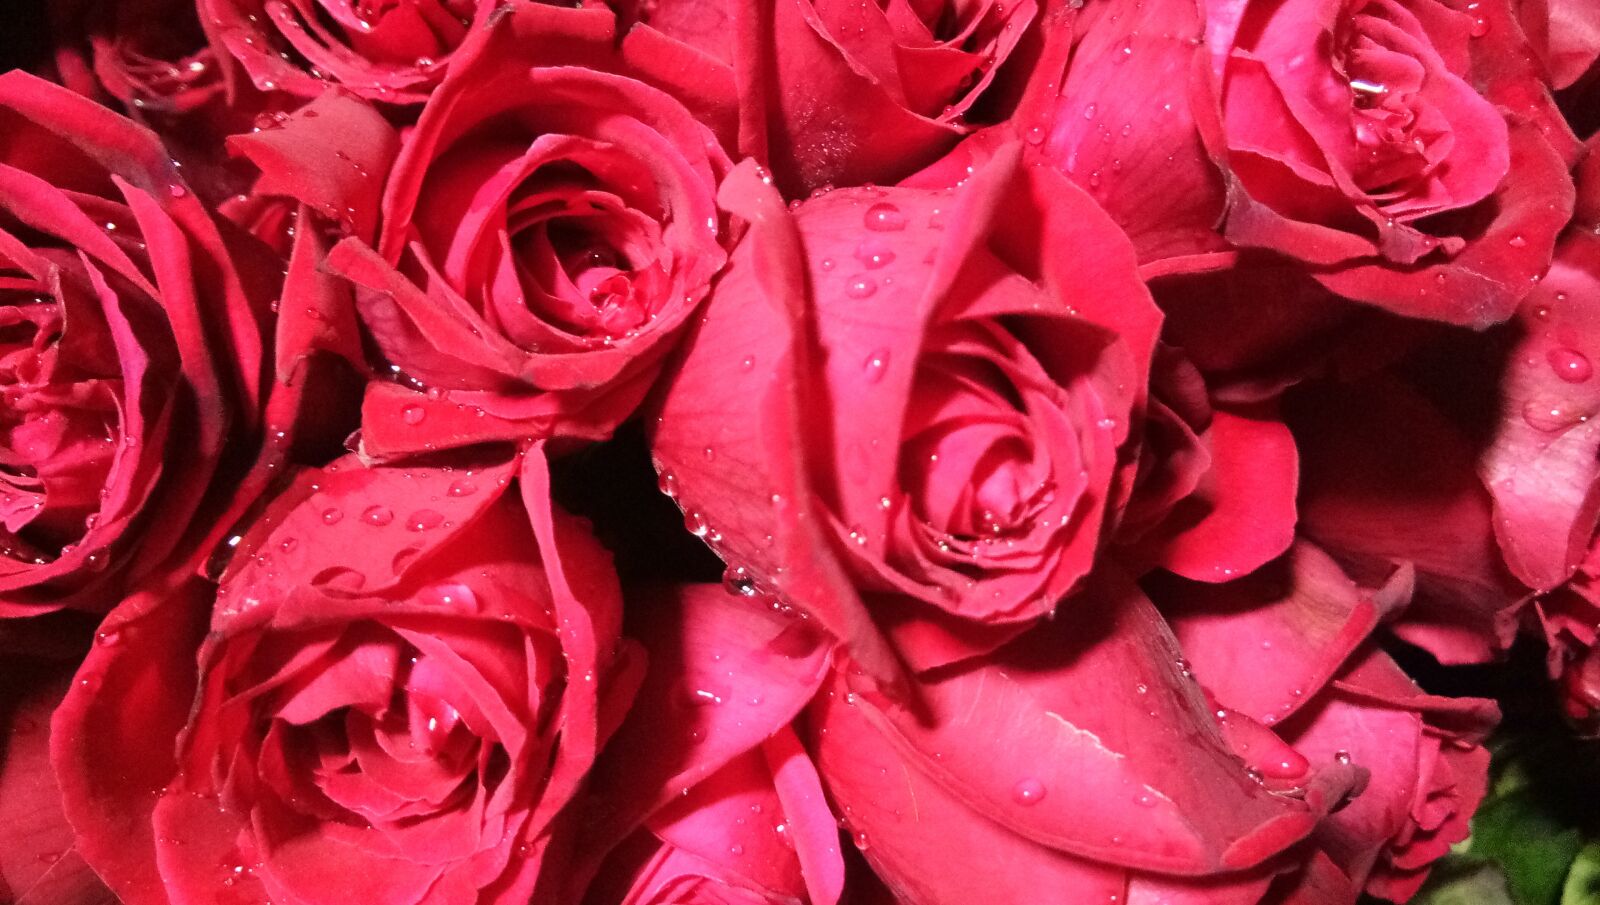 vivo 1601 sample photo. Rose, flower, petal photography